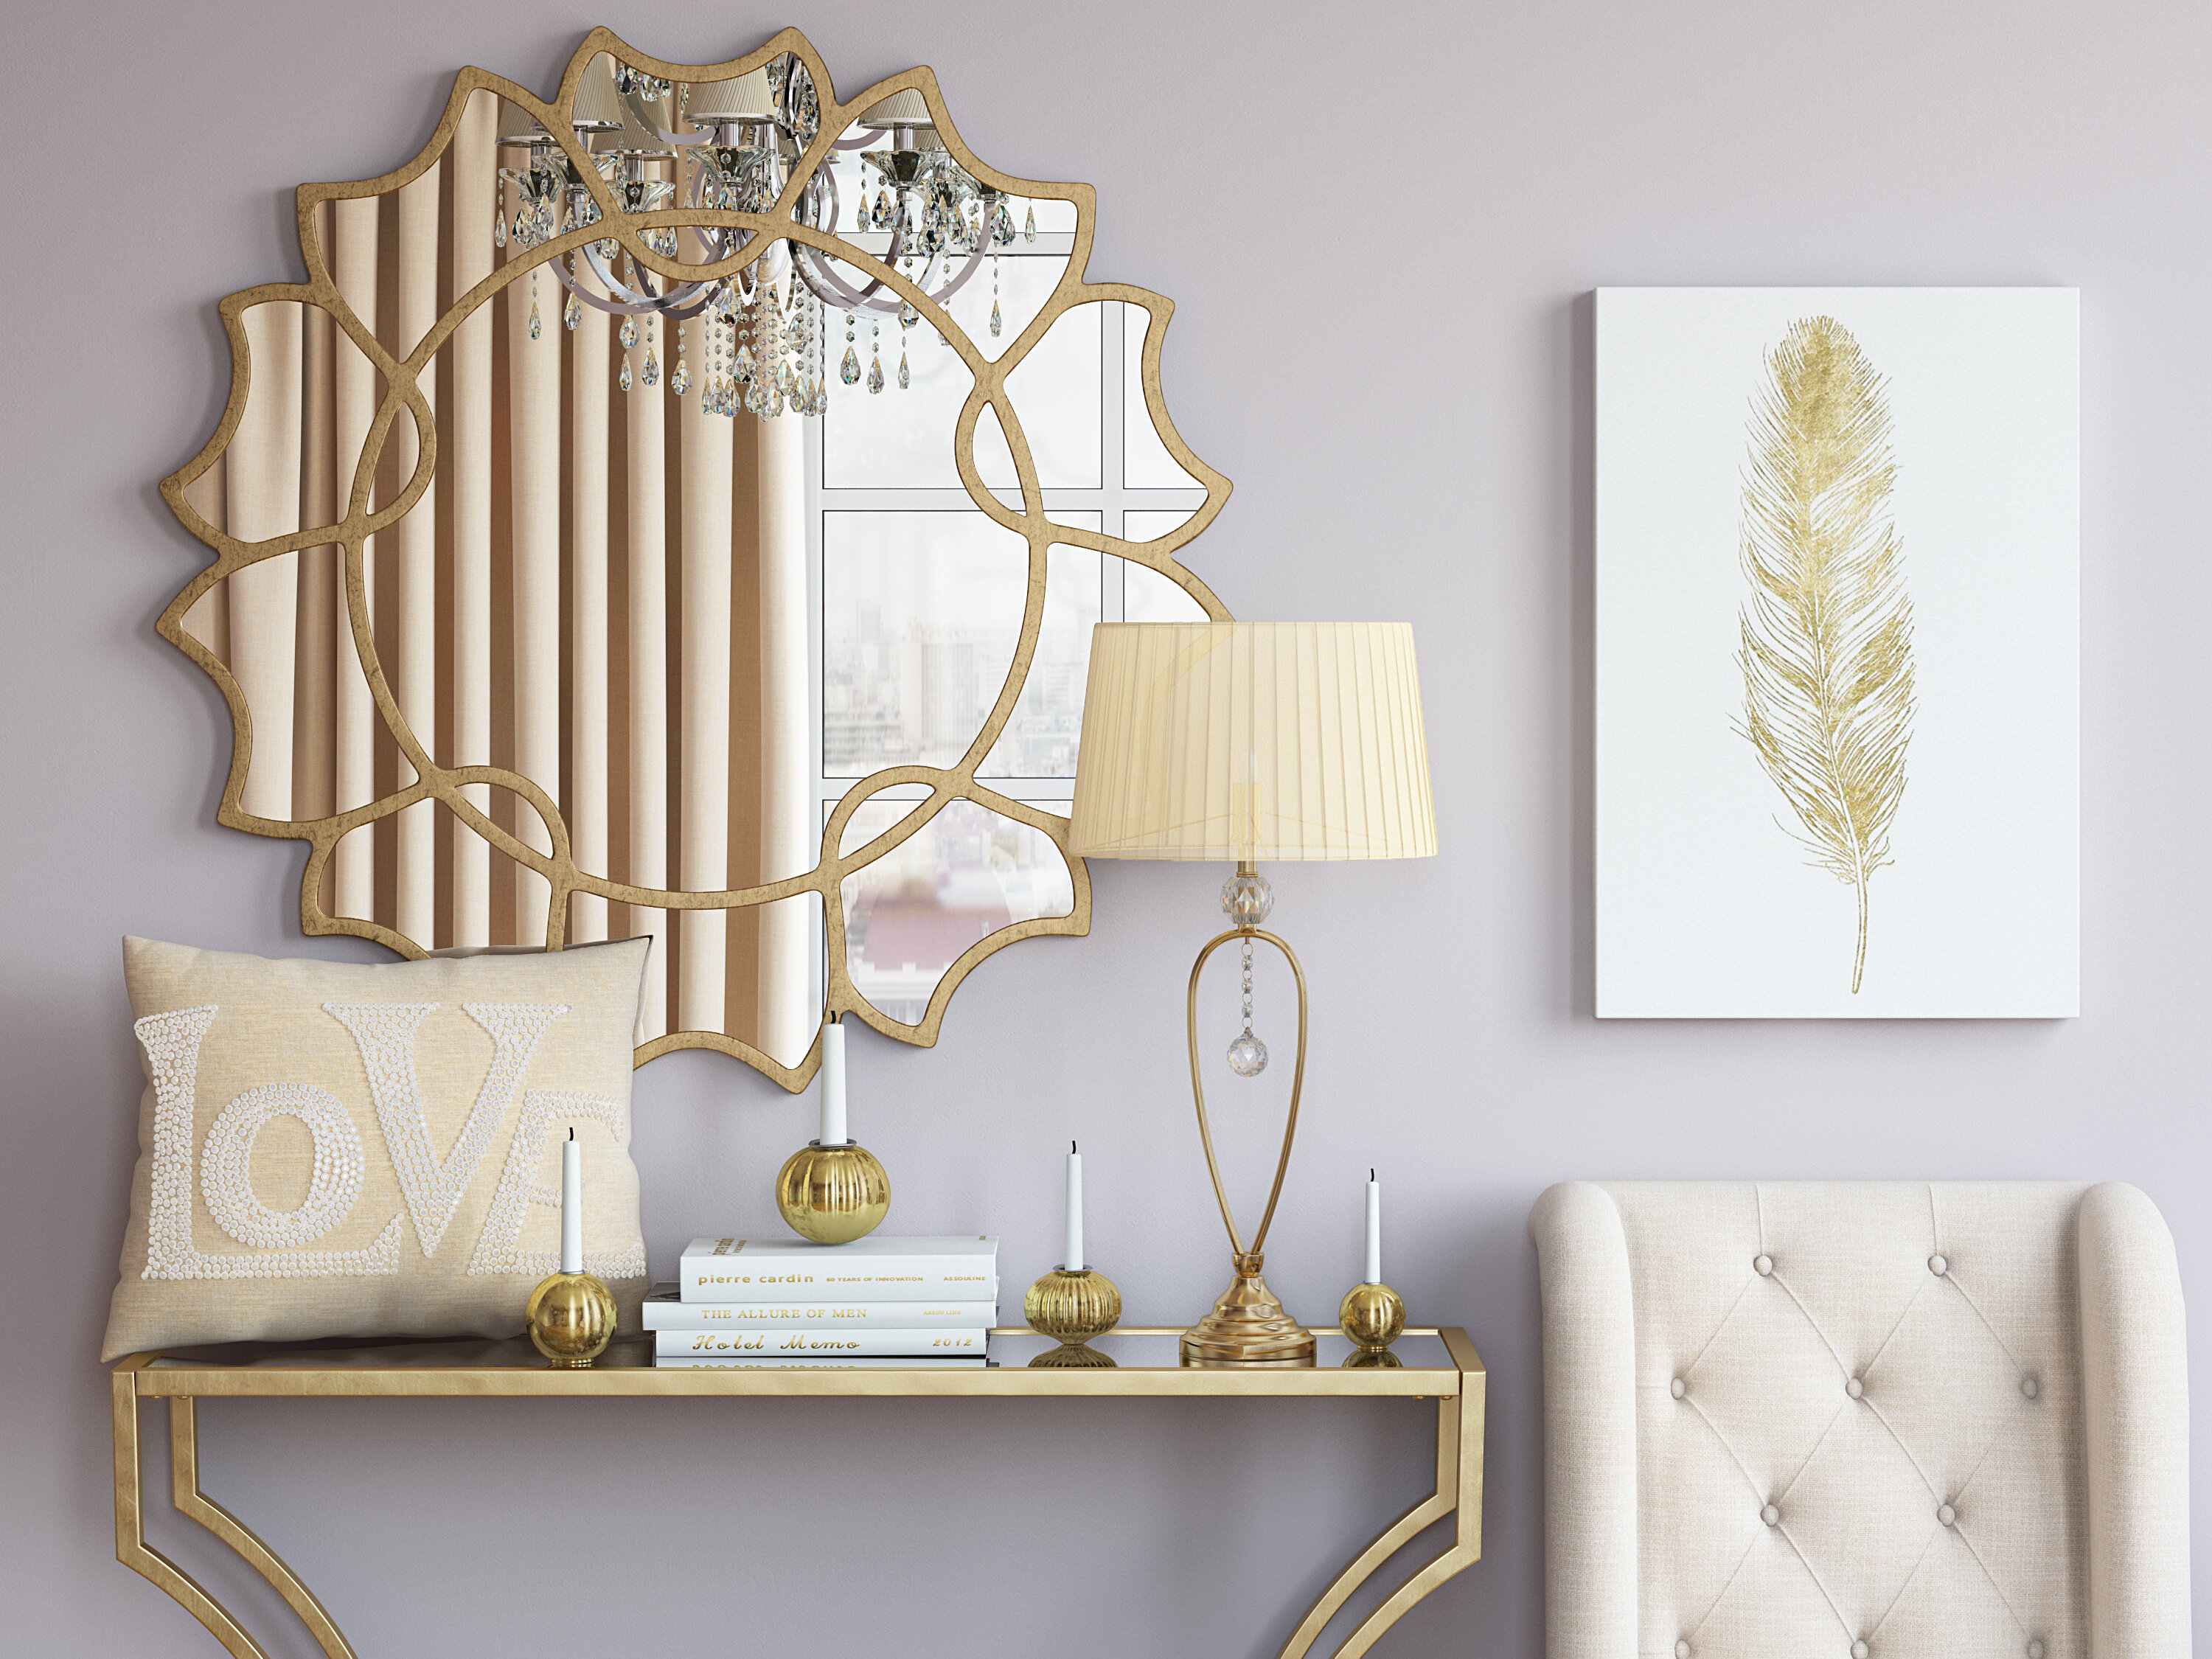 10 Dazzling Wall Mirror Decor Ideas With Photos Wayfair